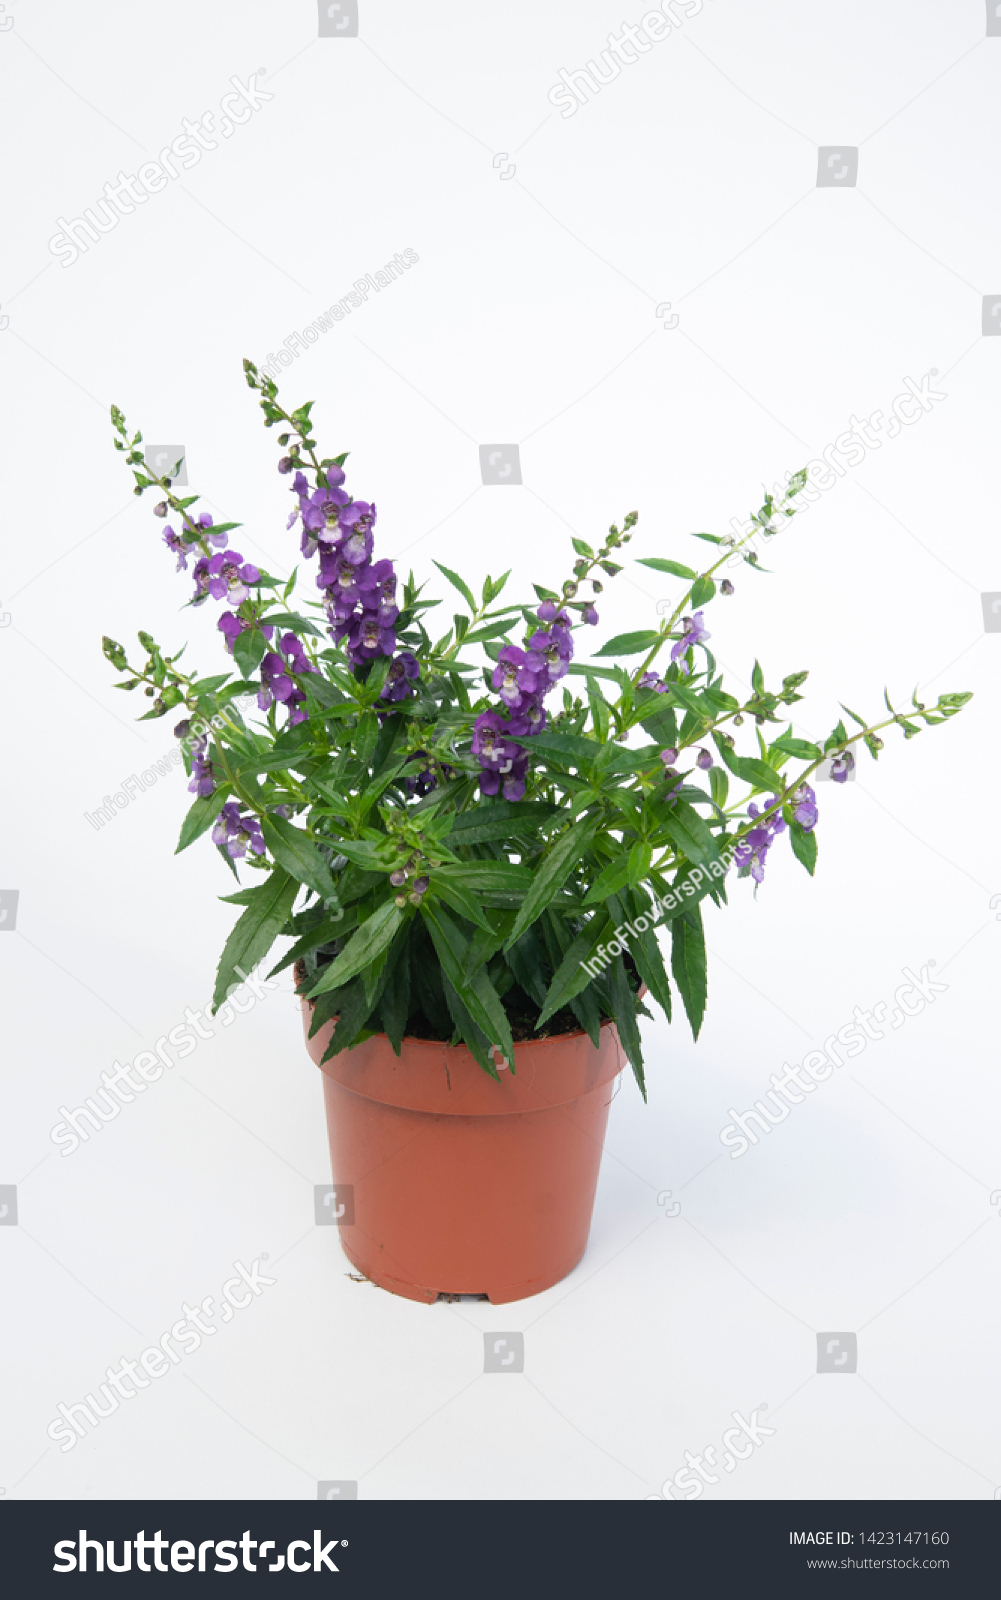 Angelonia Angelina Blue Flowering Plant Nature Stock Image 1423147160